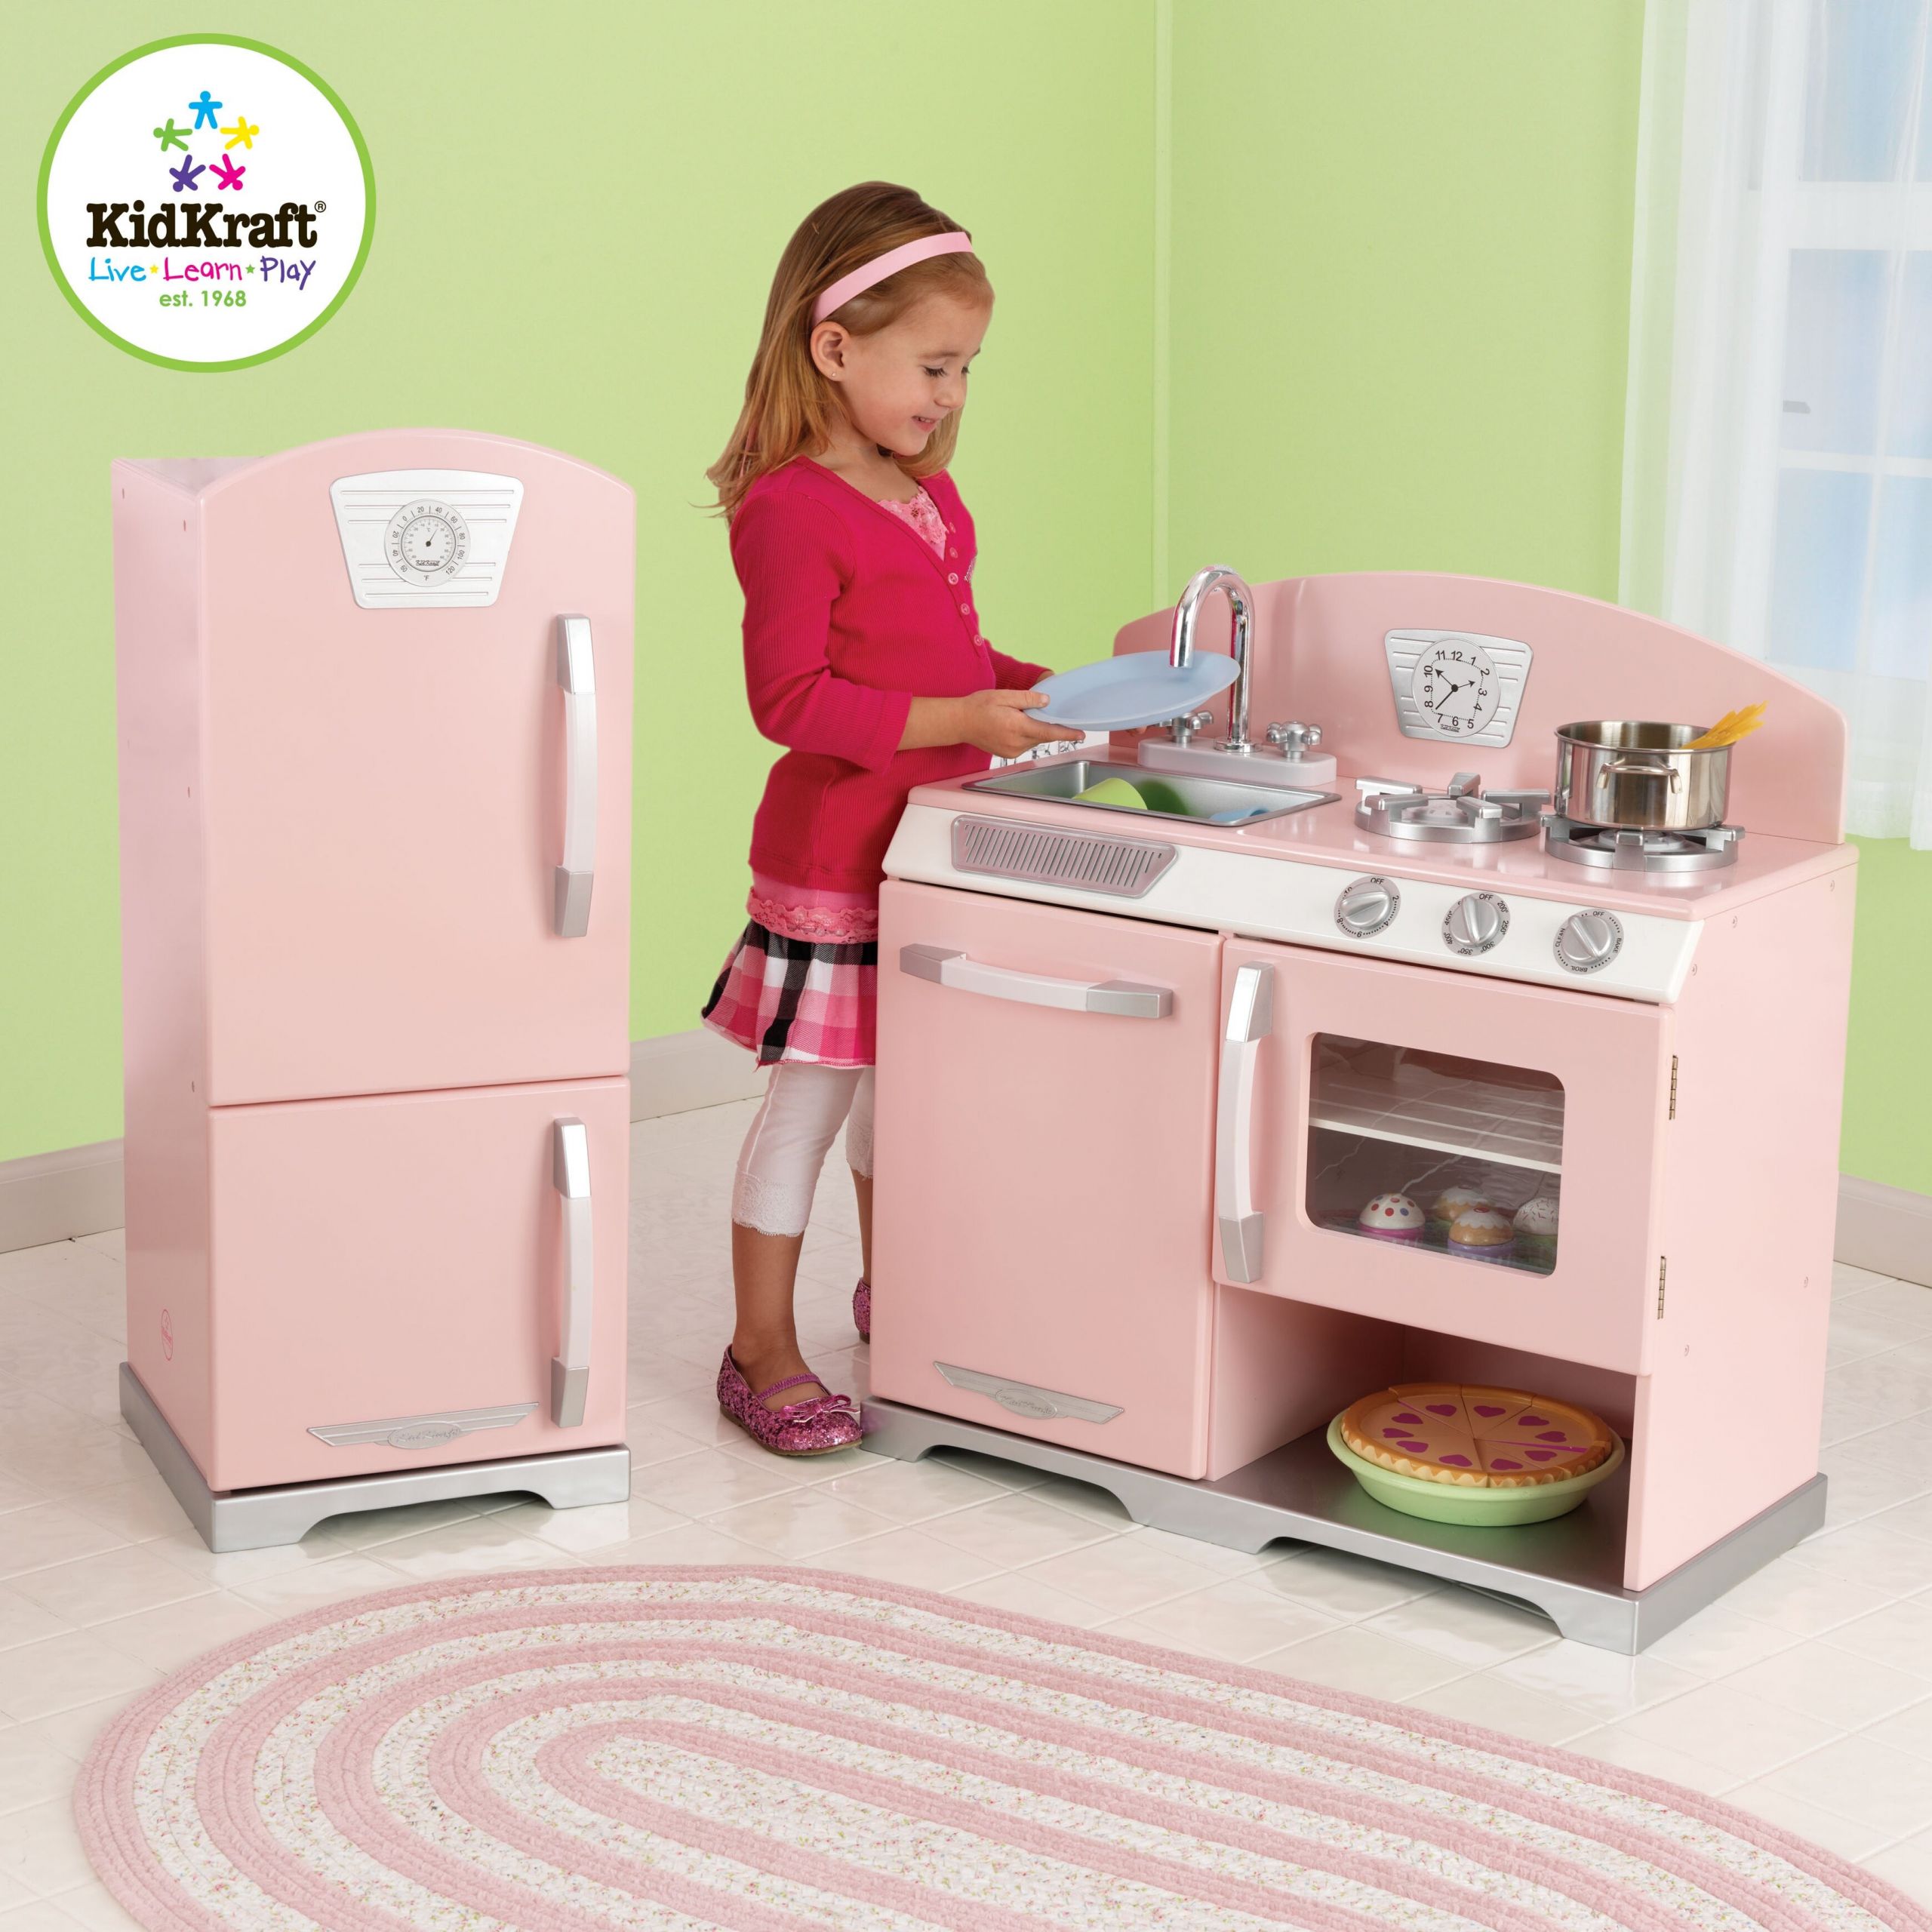 Kids Craft Kitchens Lovely Kidkraft 2 Piece Retro Kitchen And Refrigerator Set Of Kids Craft Kitchens Scaled 